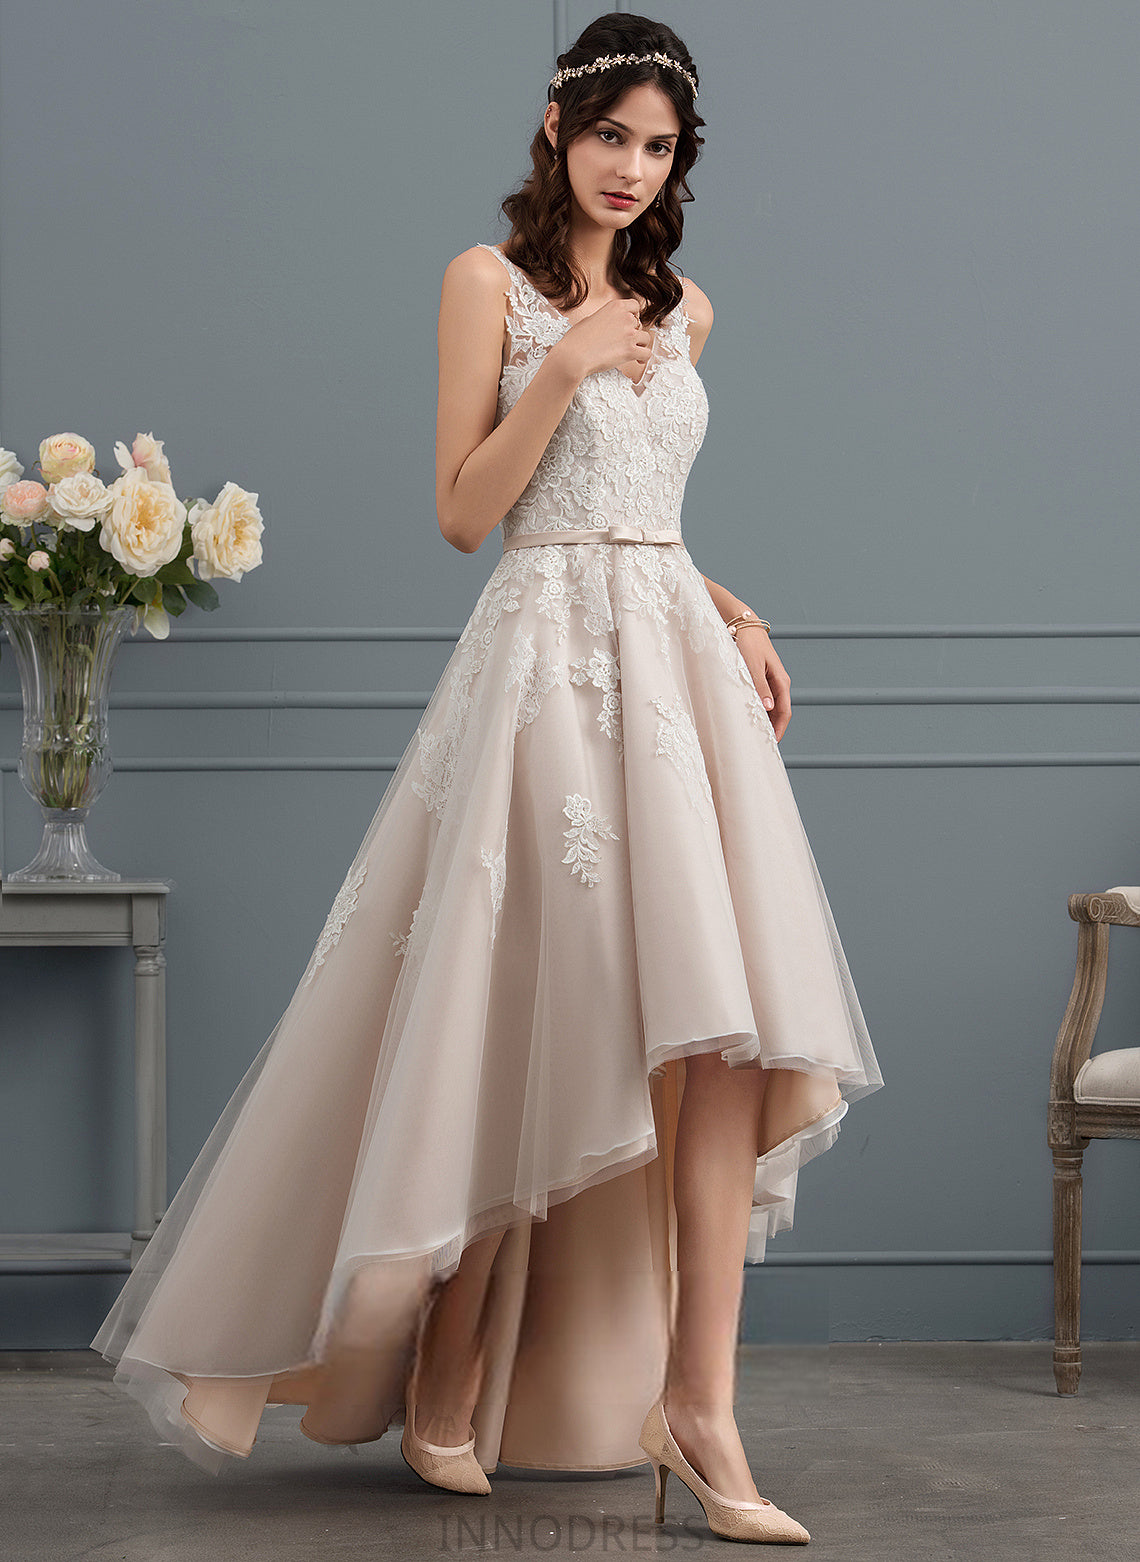 Bow(s) Carolina Asymmetrical Tulle V-neck Wedding Wedding Dresses Satin A-Line Dress With Lace